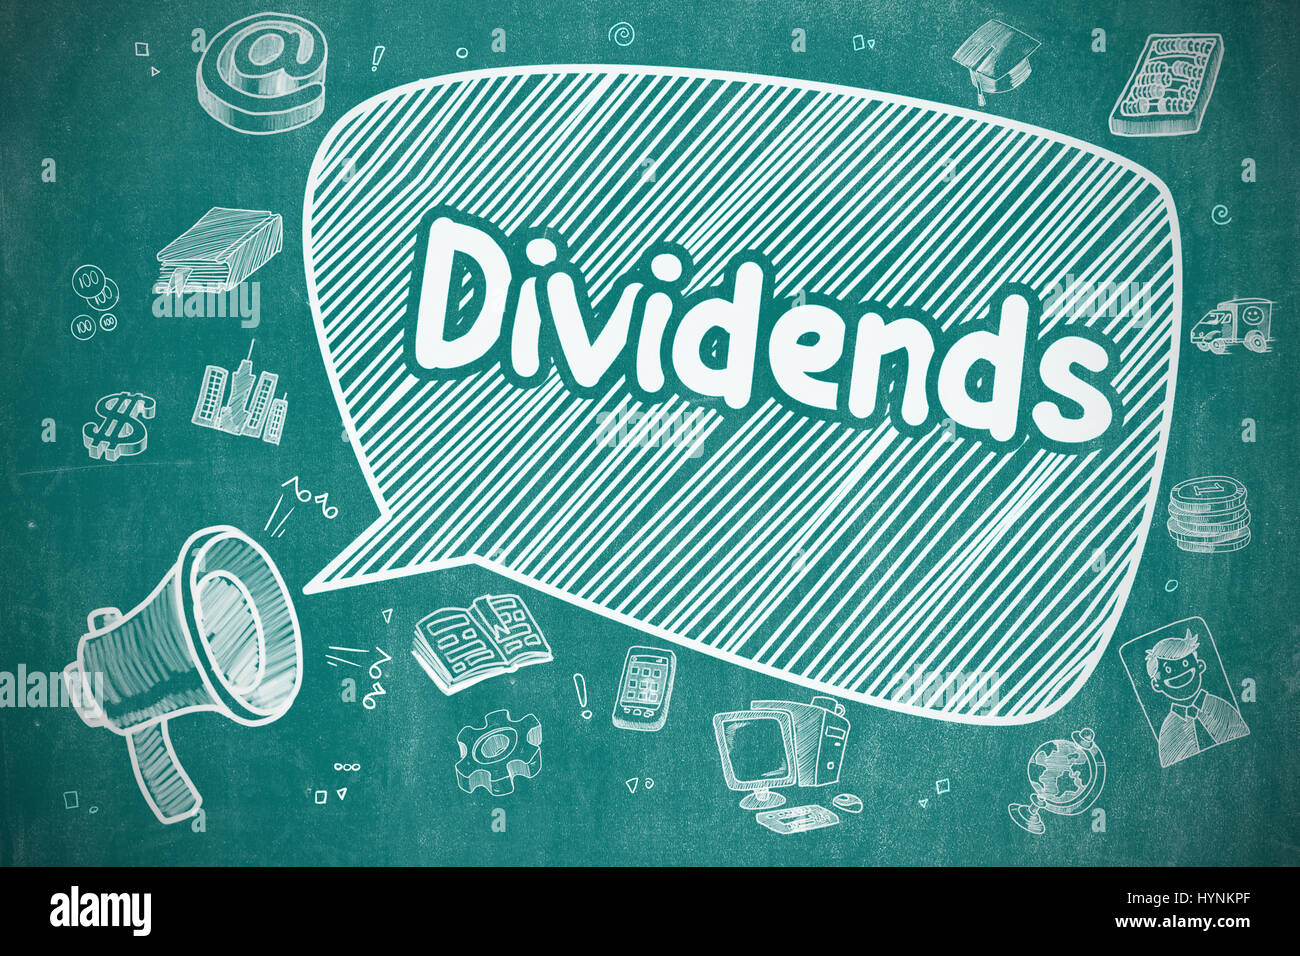 Dividends - Hand Drawn Illustration on Blue Chalkboard. Stock Photo